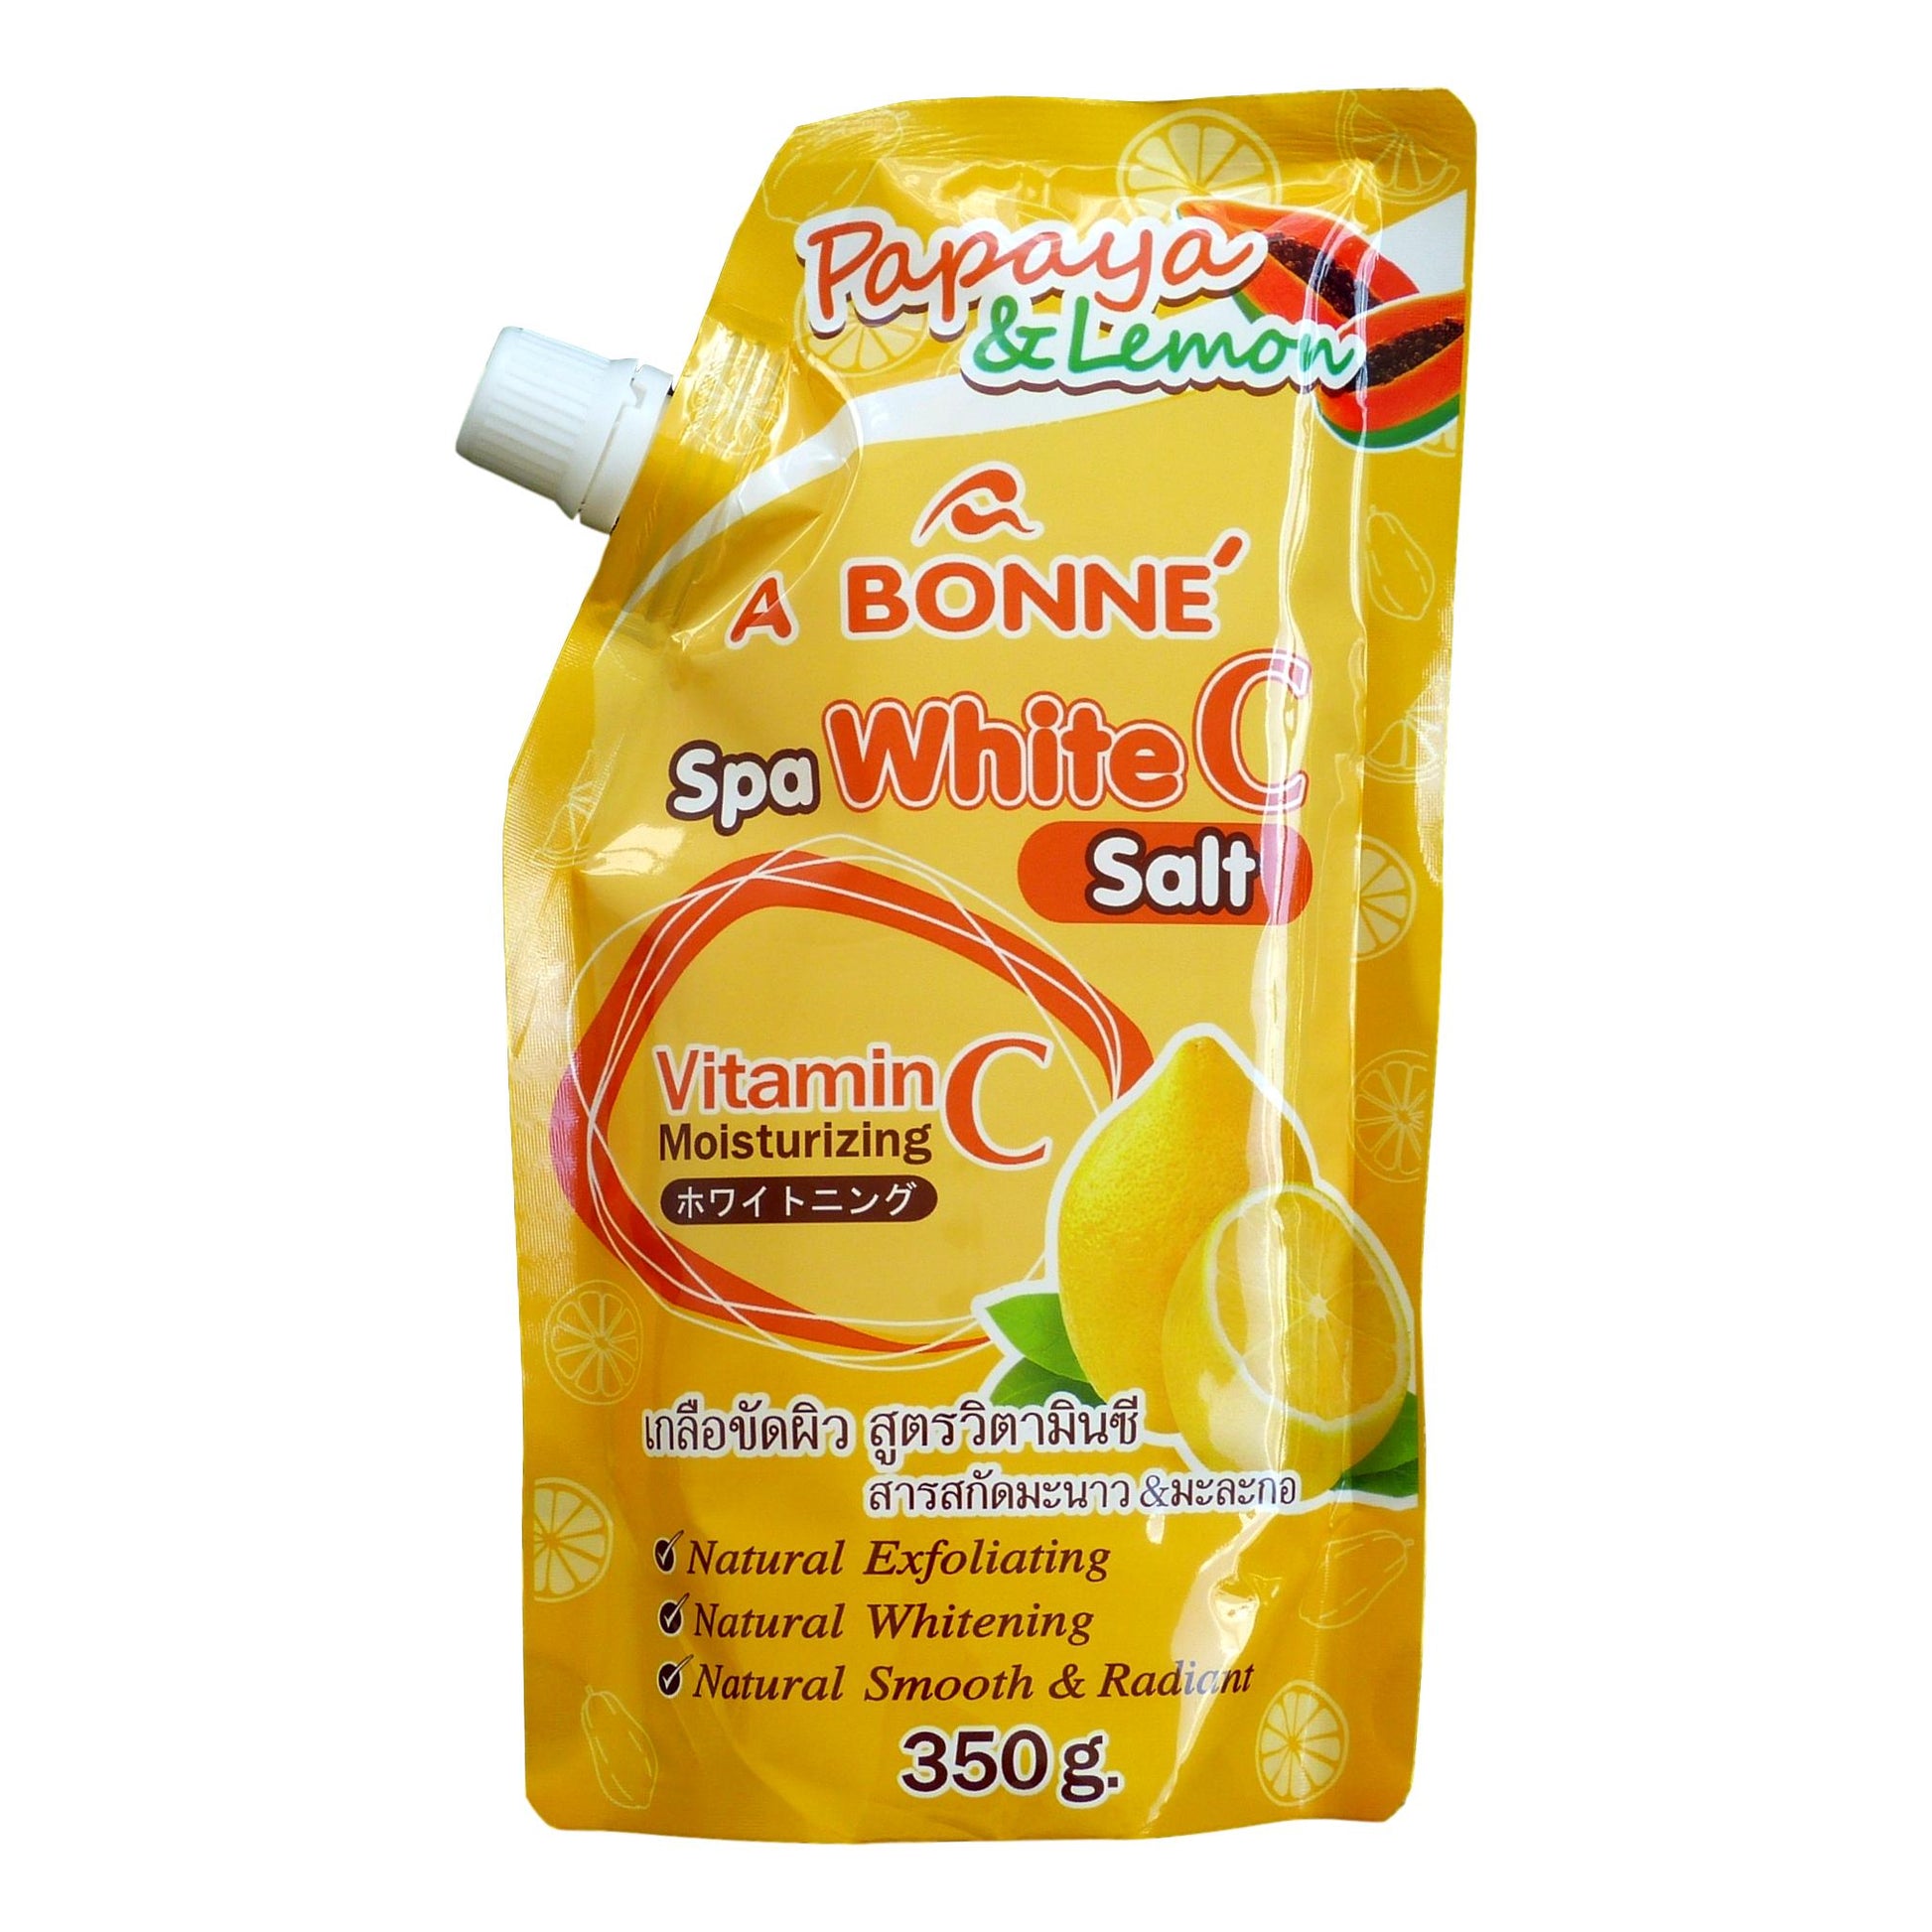 A Bonne Papays & Lemon Spa Salt Moisturizes Whitens and Softens Skin 350g - Asian Beauty Supply